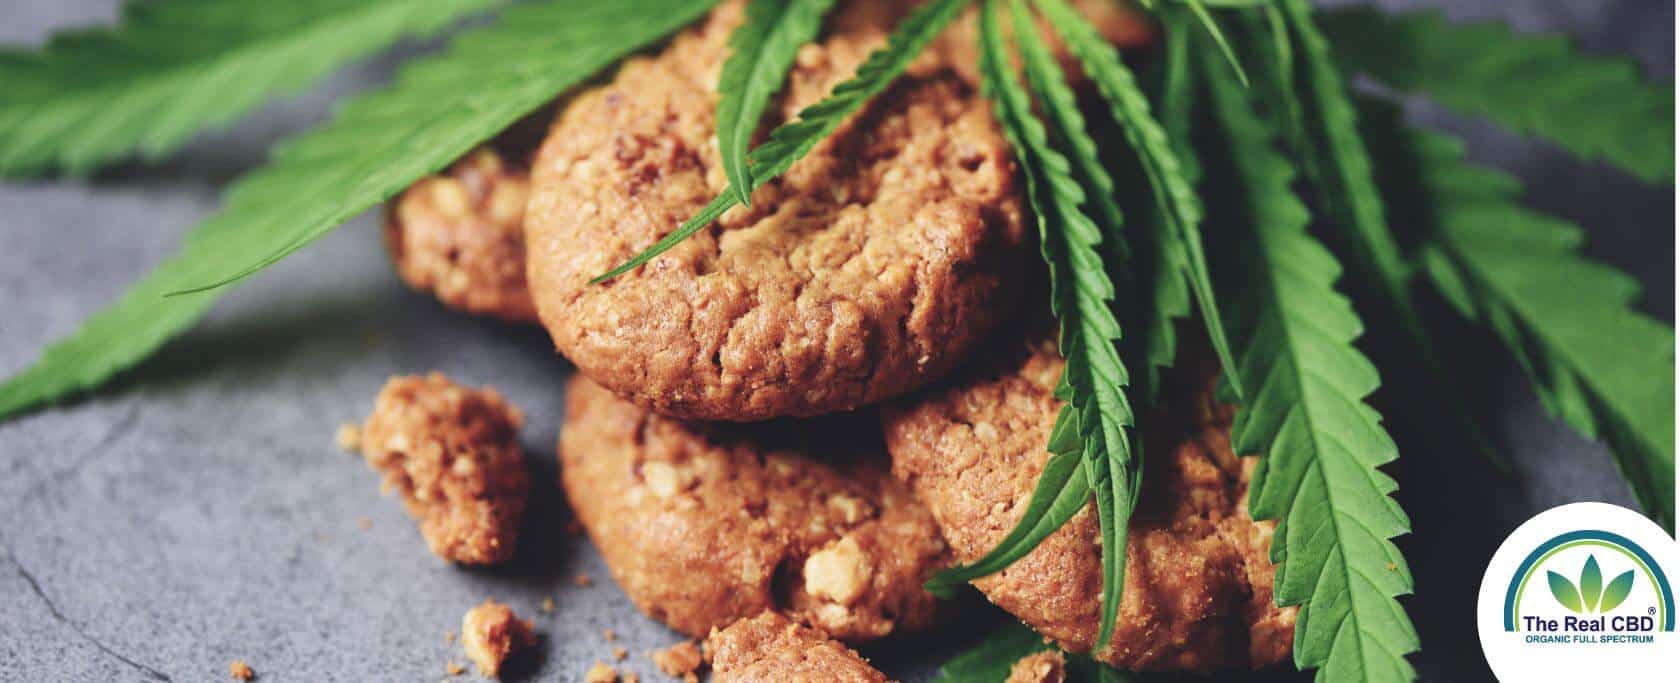 Cookies with hemp leaves around